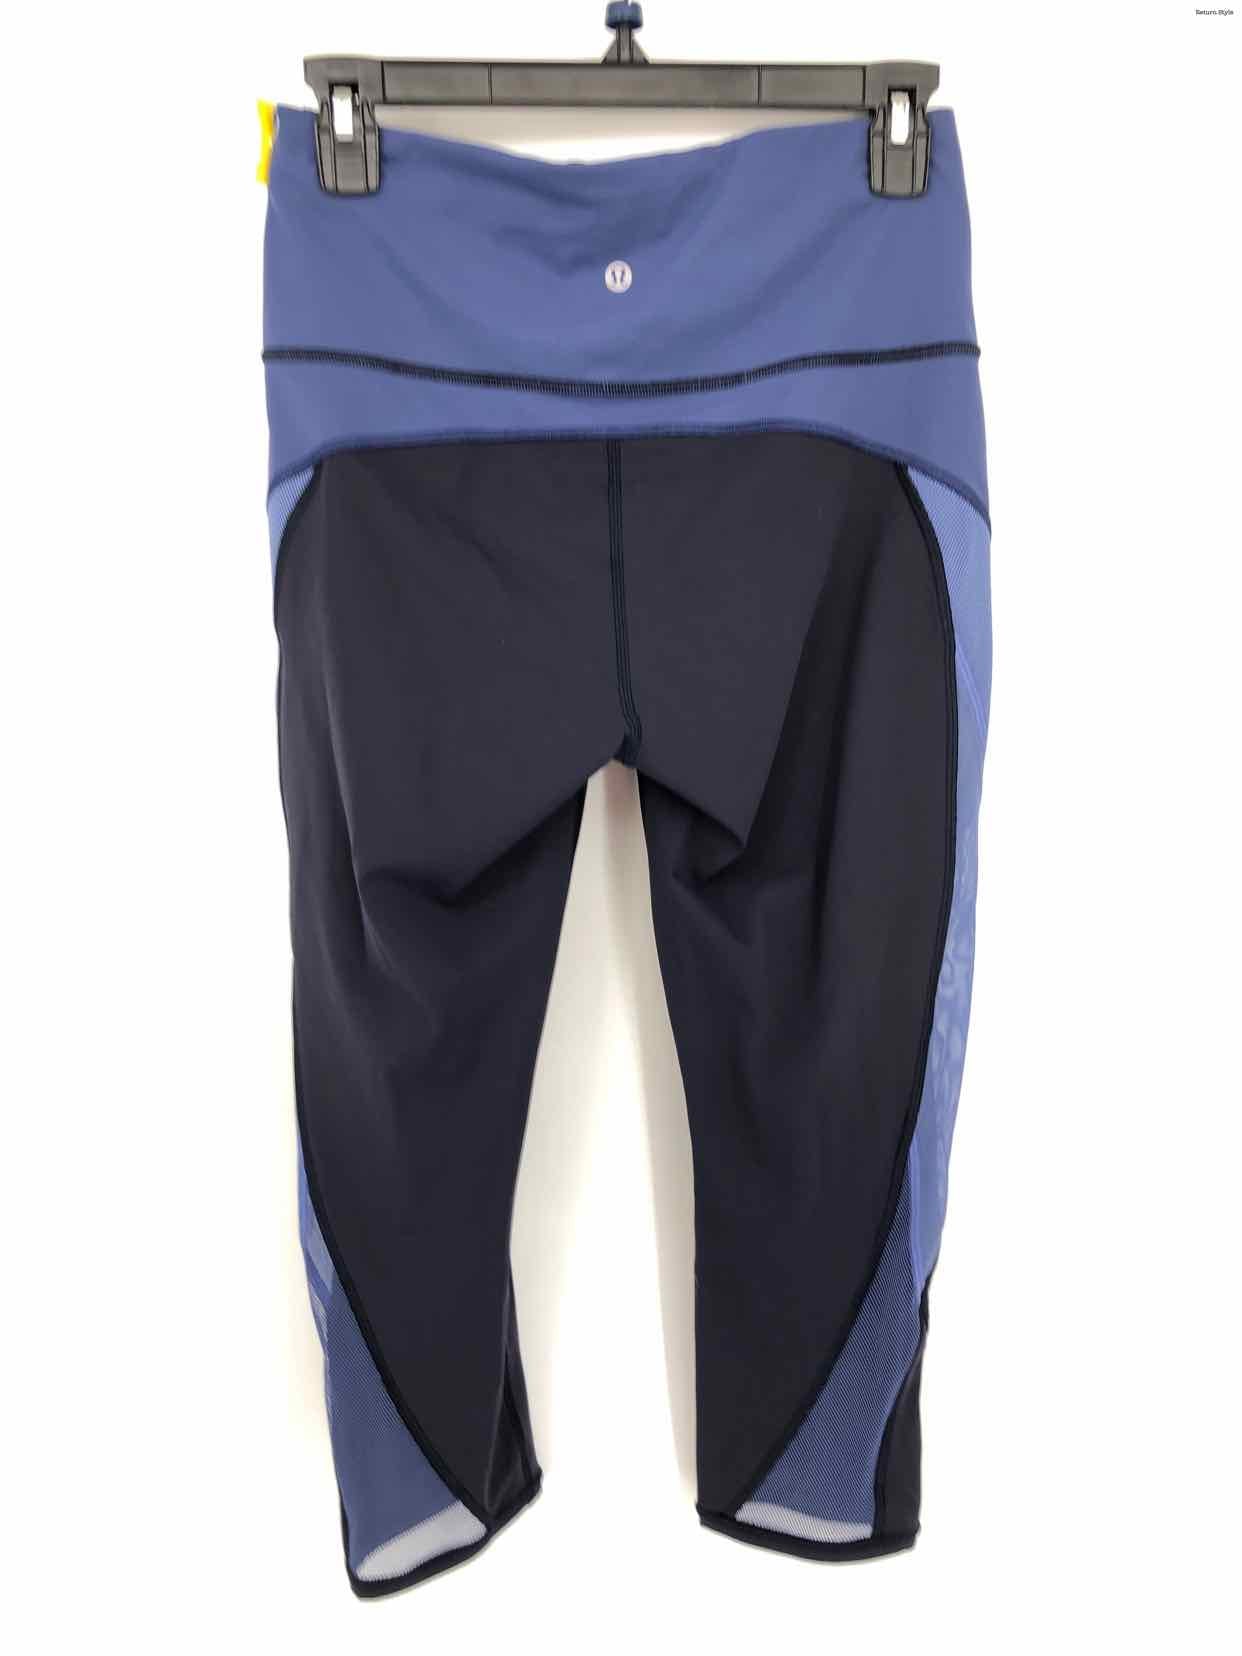 LULULEMON Navy Blue Mesh Trim Legging Size 8 (M) Activewear